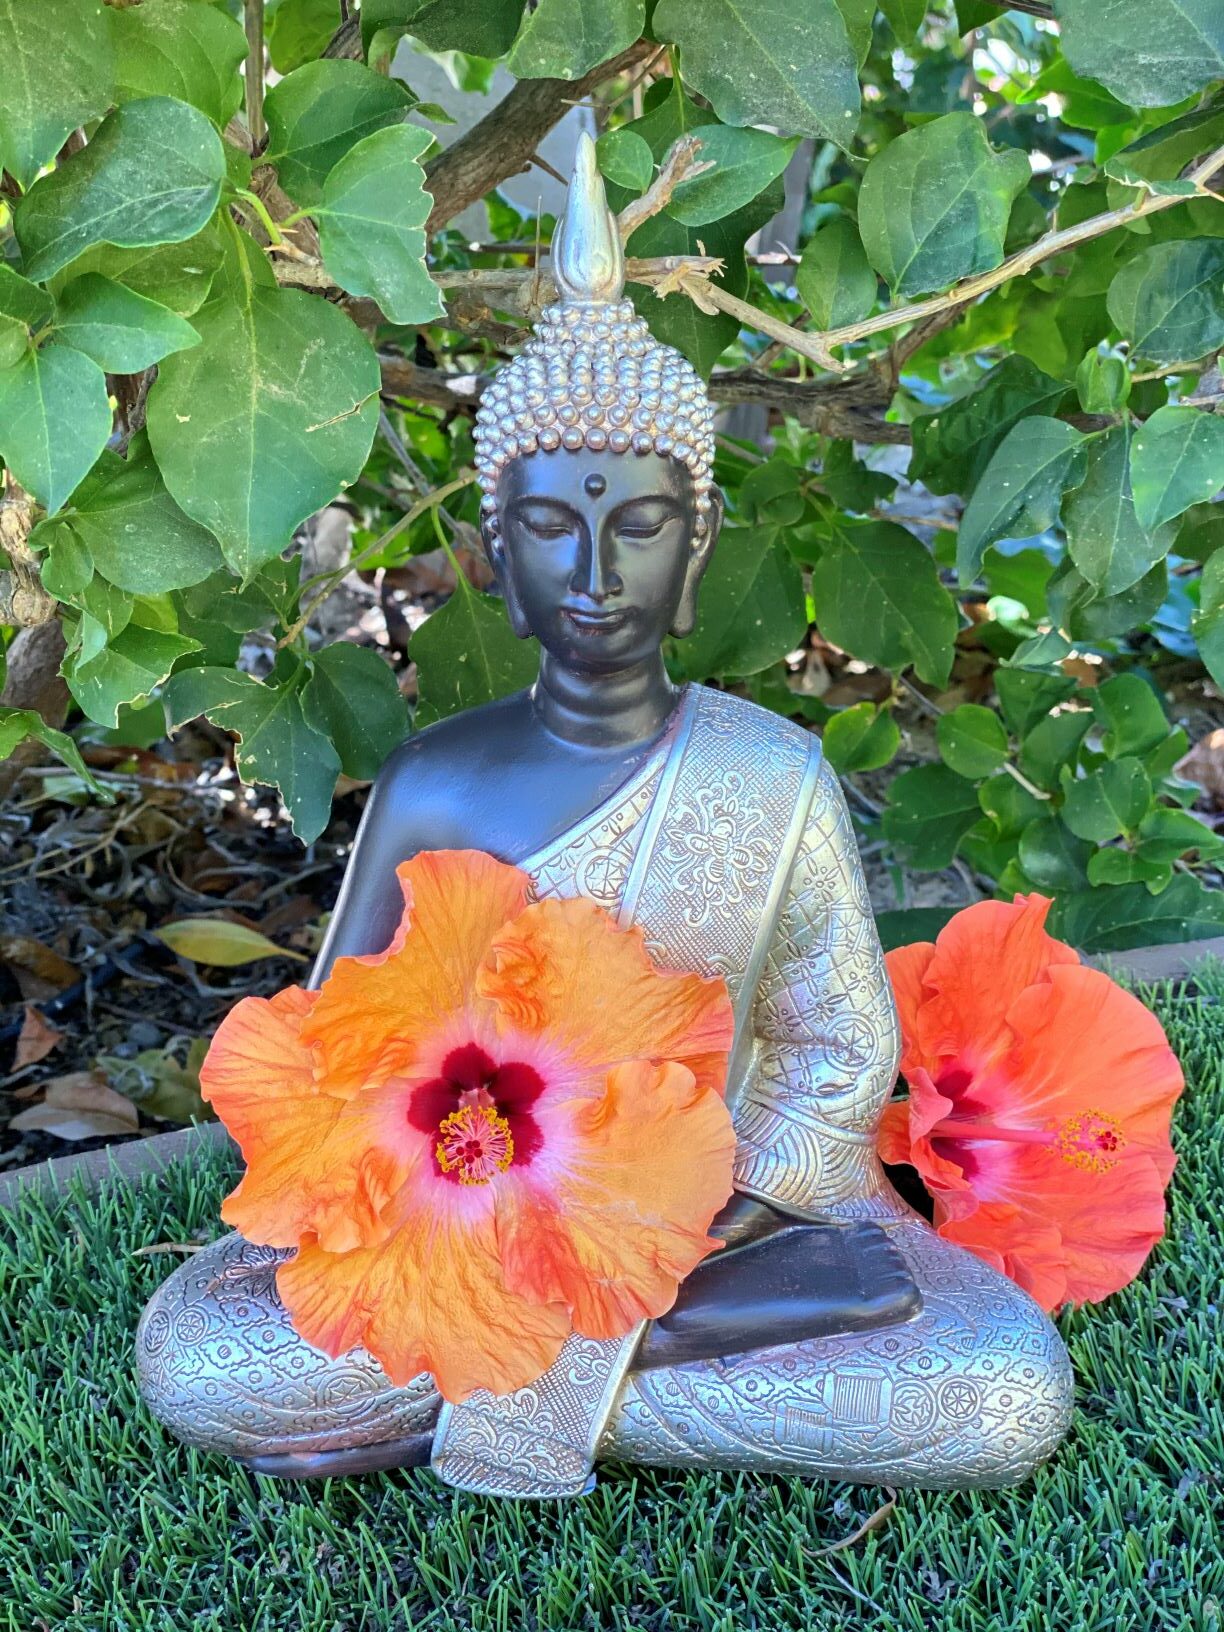 Buddha statue sitting in grass with orange hibiscus flowers